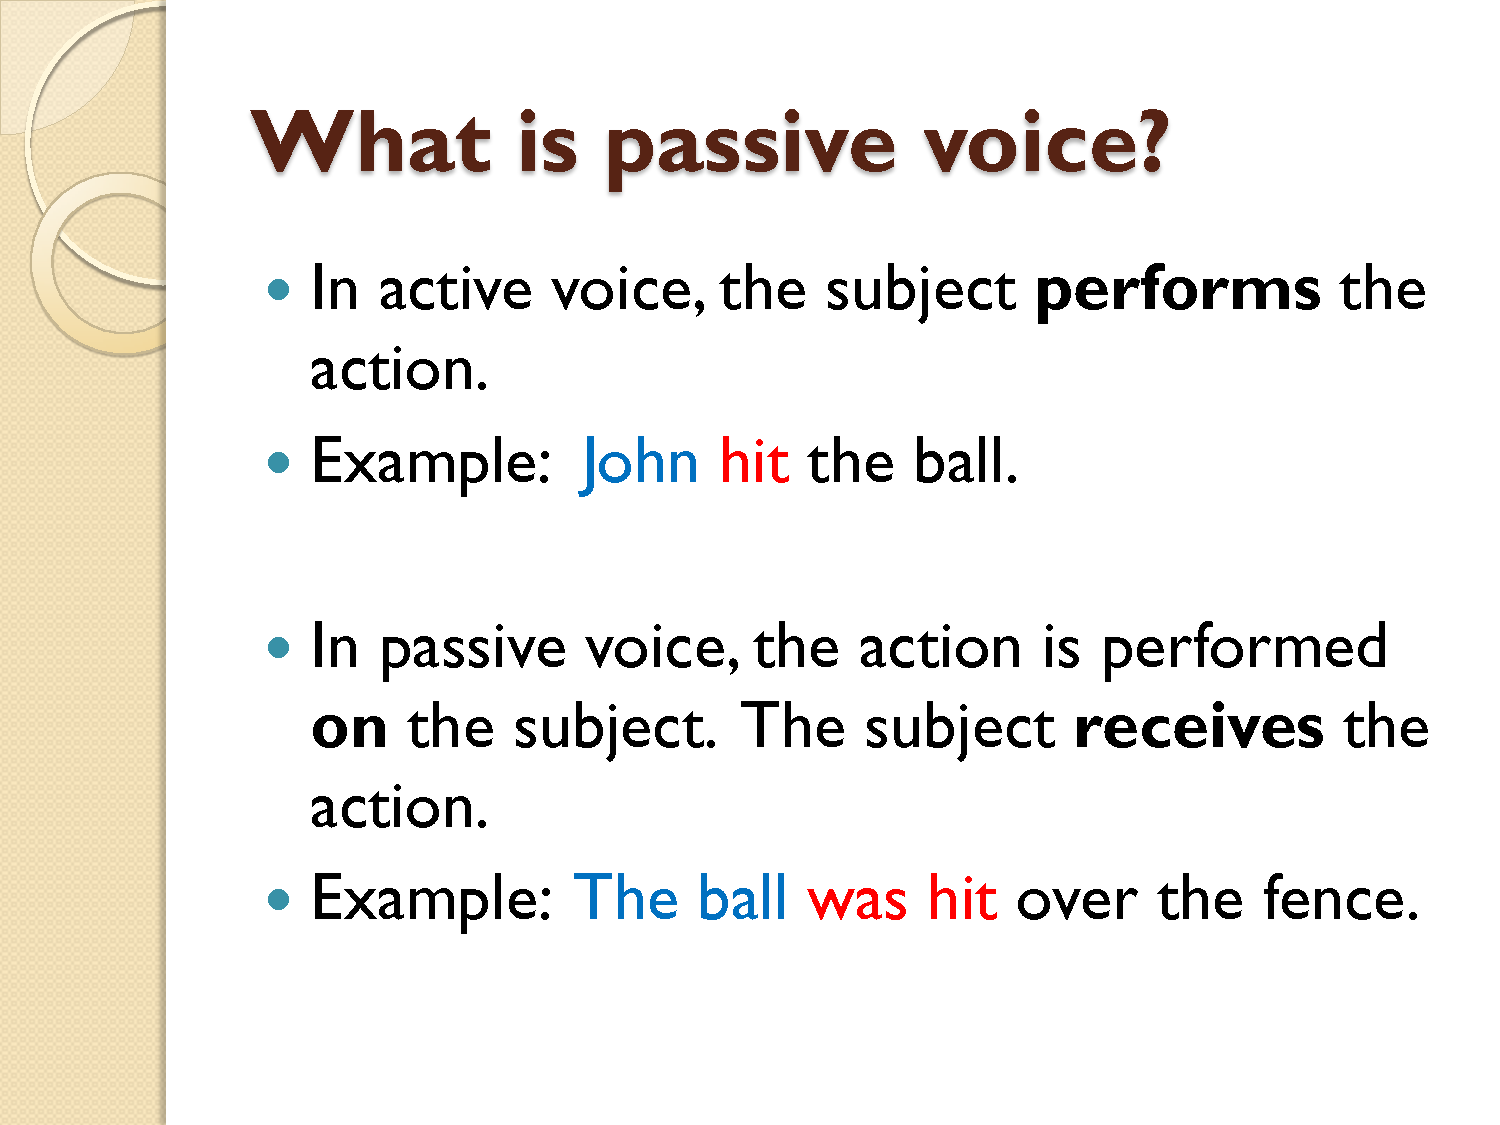 Complete with the passive voice. Passive Voice. Active and Passive Voice. What is Passive Voice. Active Voice and Passive Voice.